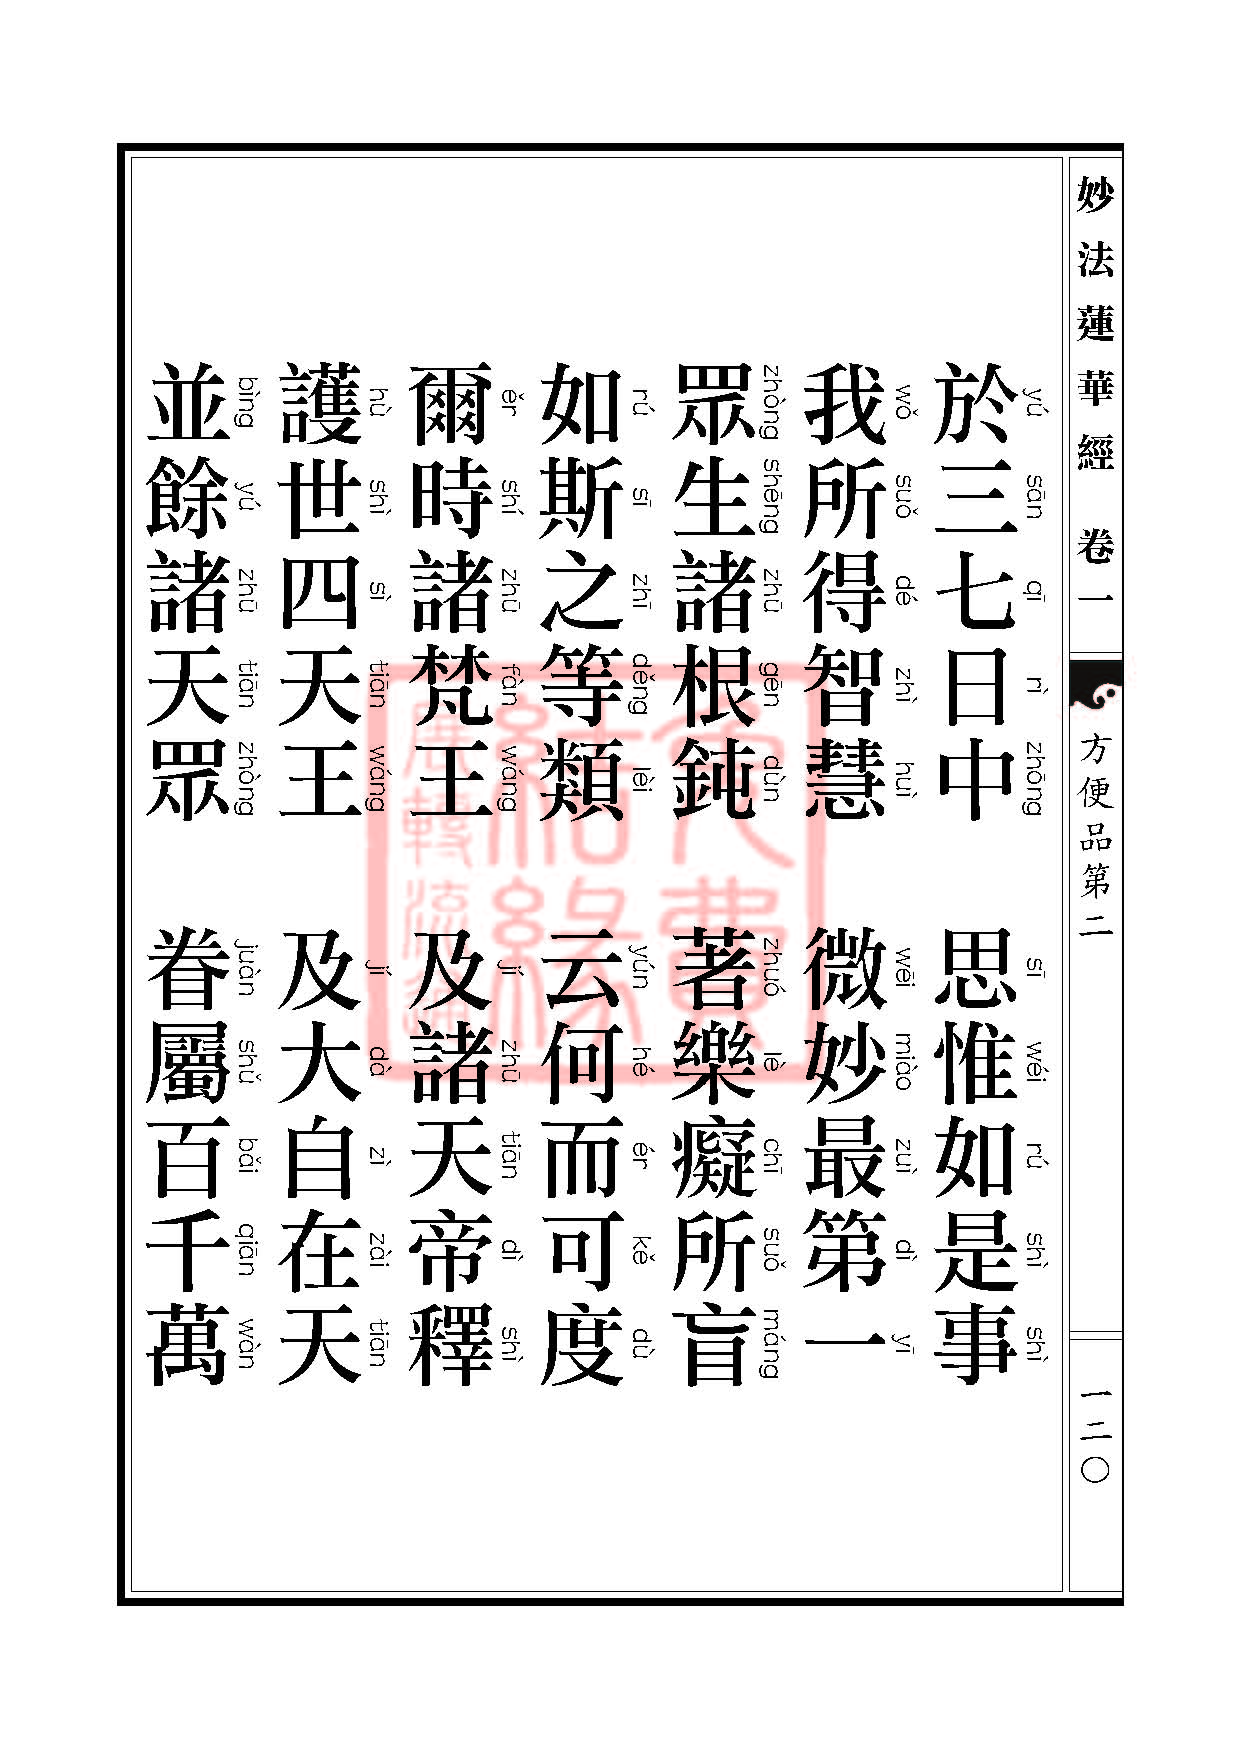 Book_FHJ_HK-A6-PY_Web_页面_120.jpg